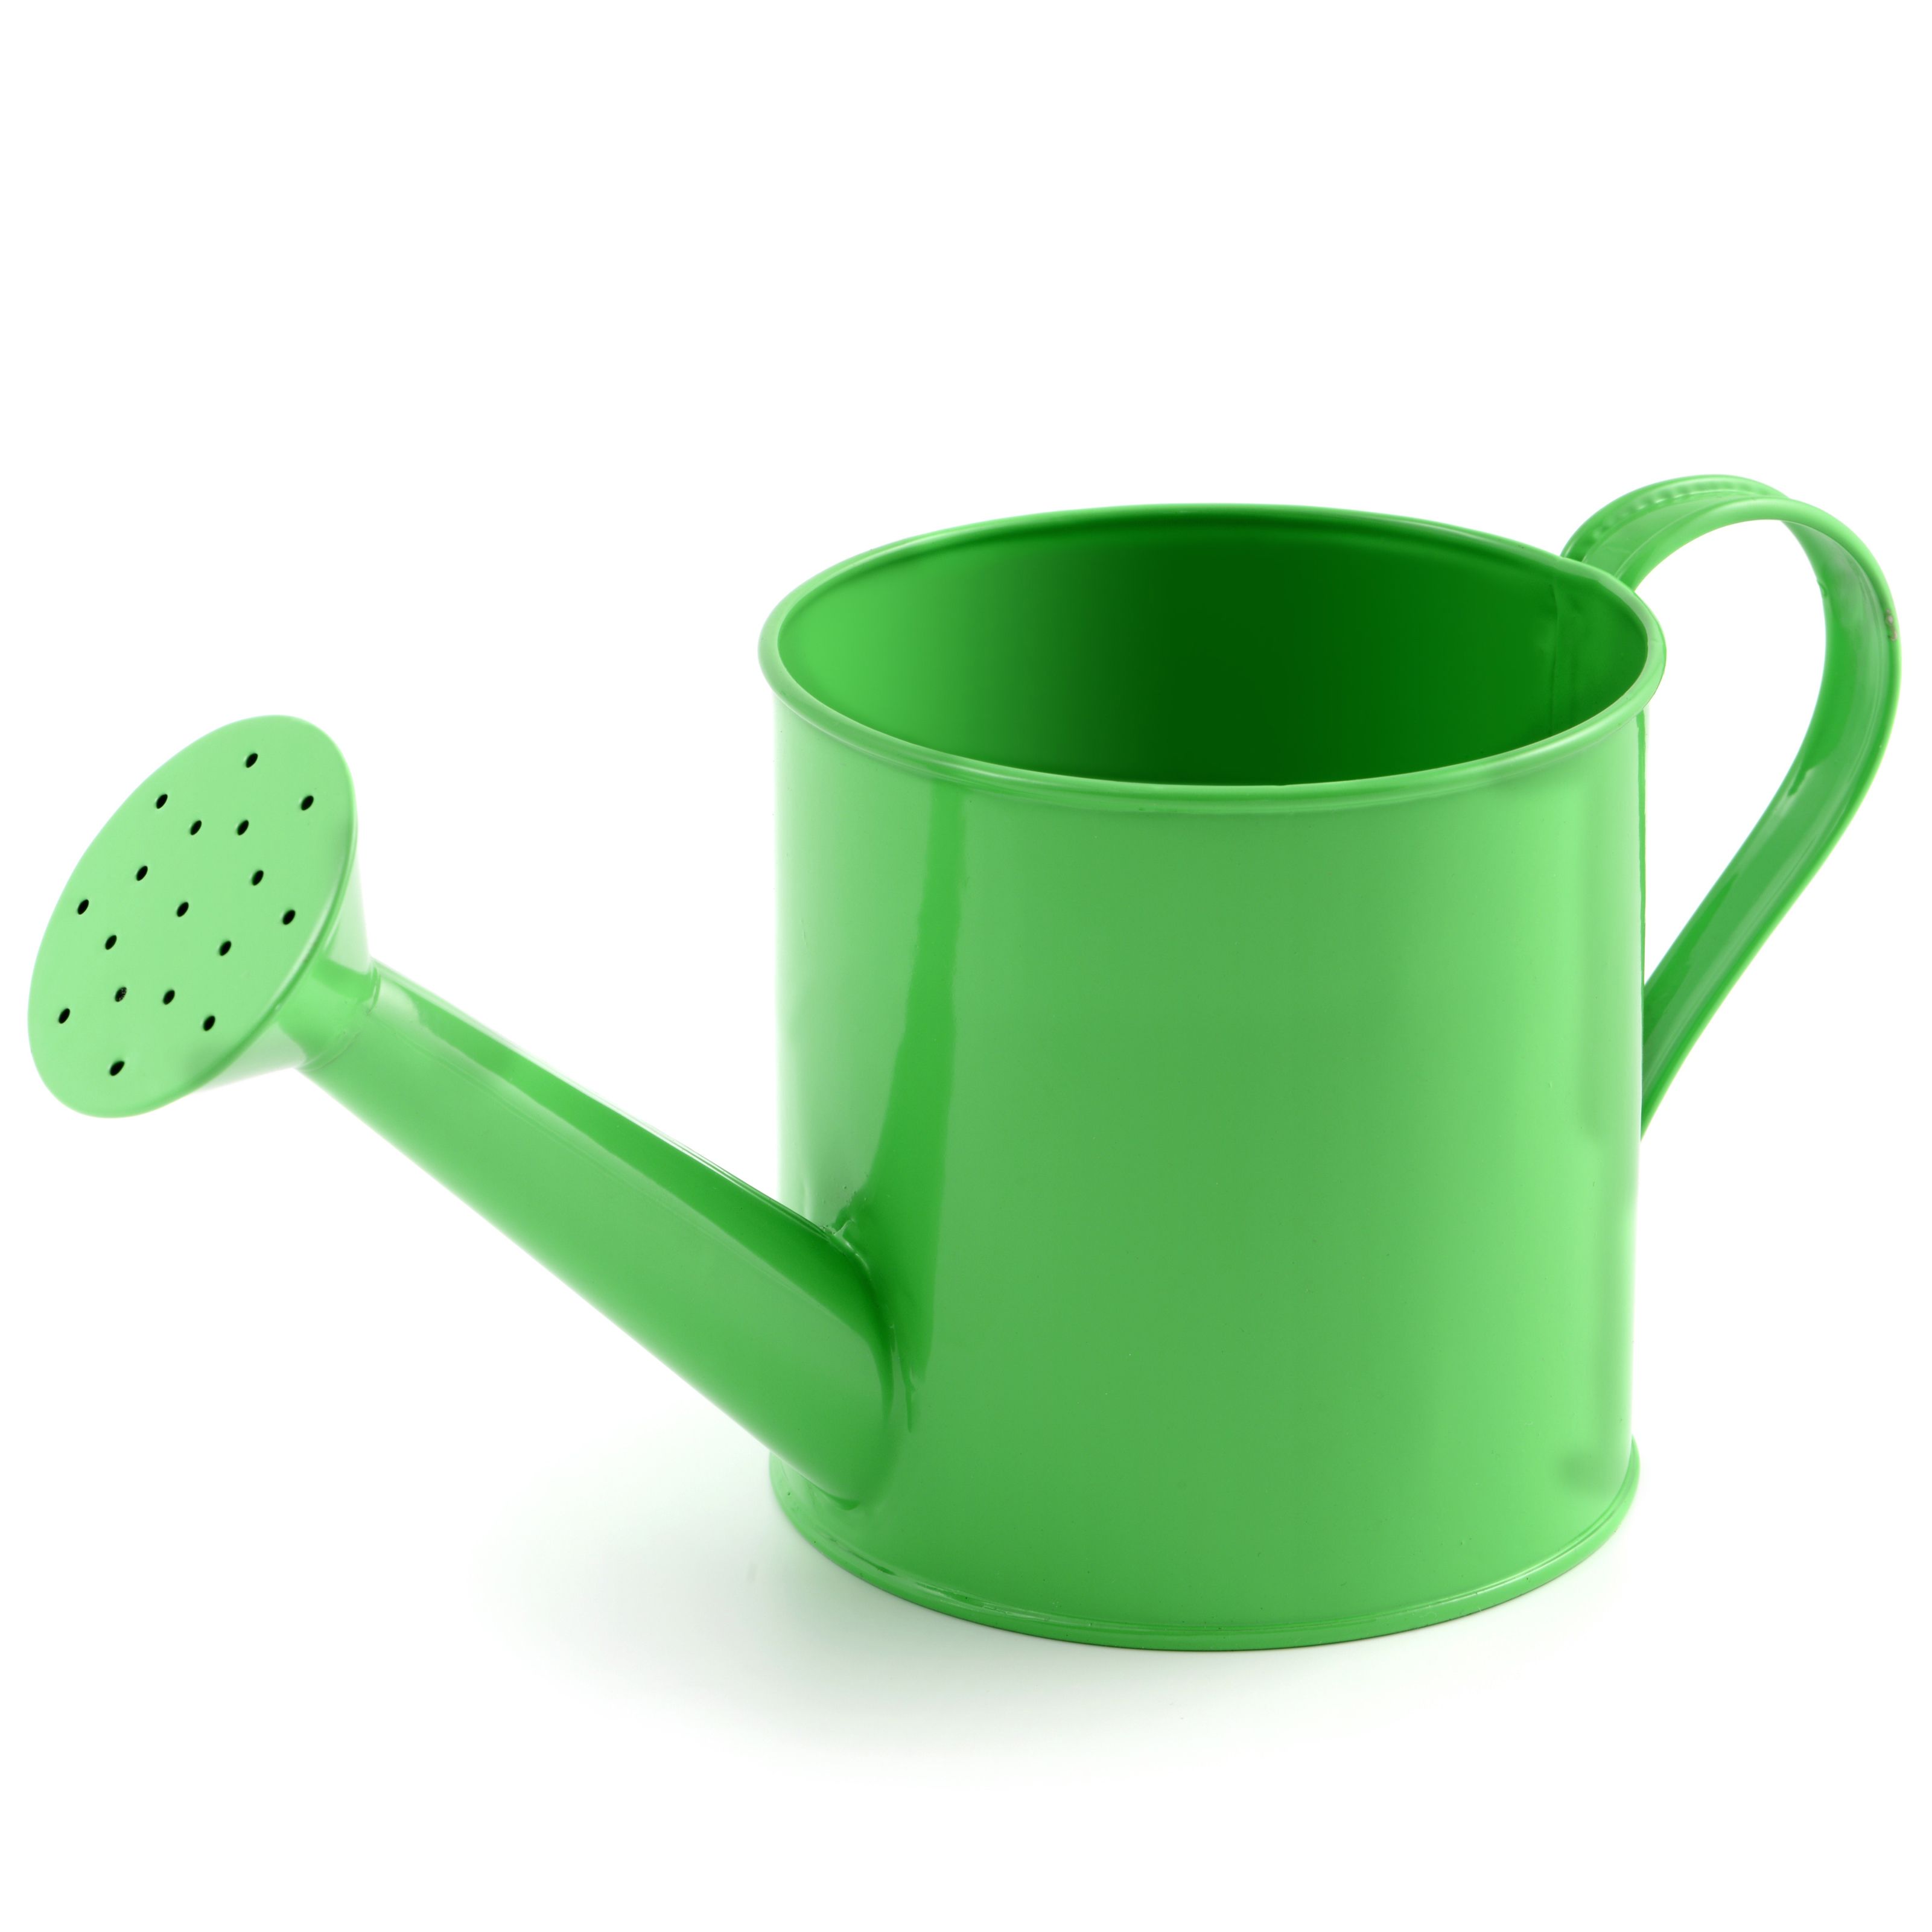 Watering can, Green, Product, Tool, Mug, Cup, Plastic, Tea strainer, Tableware, 